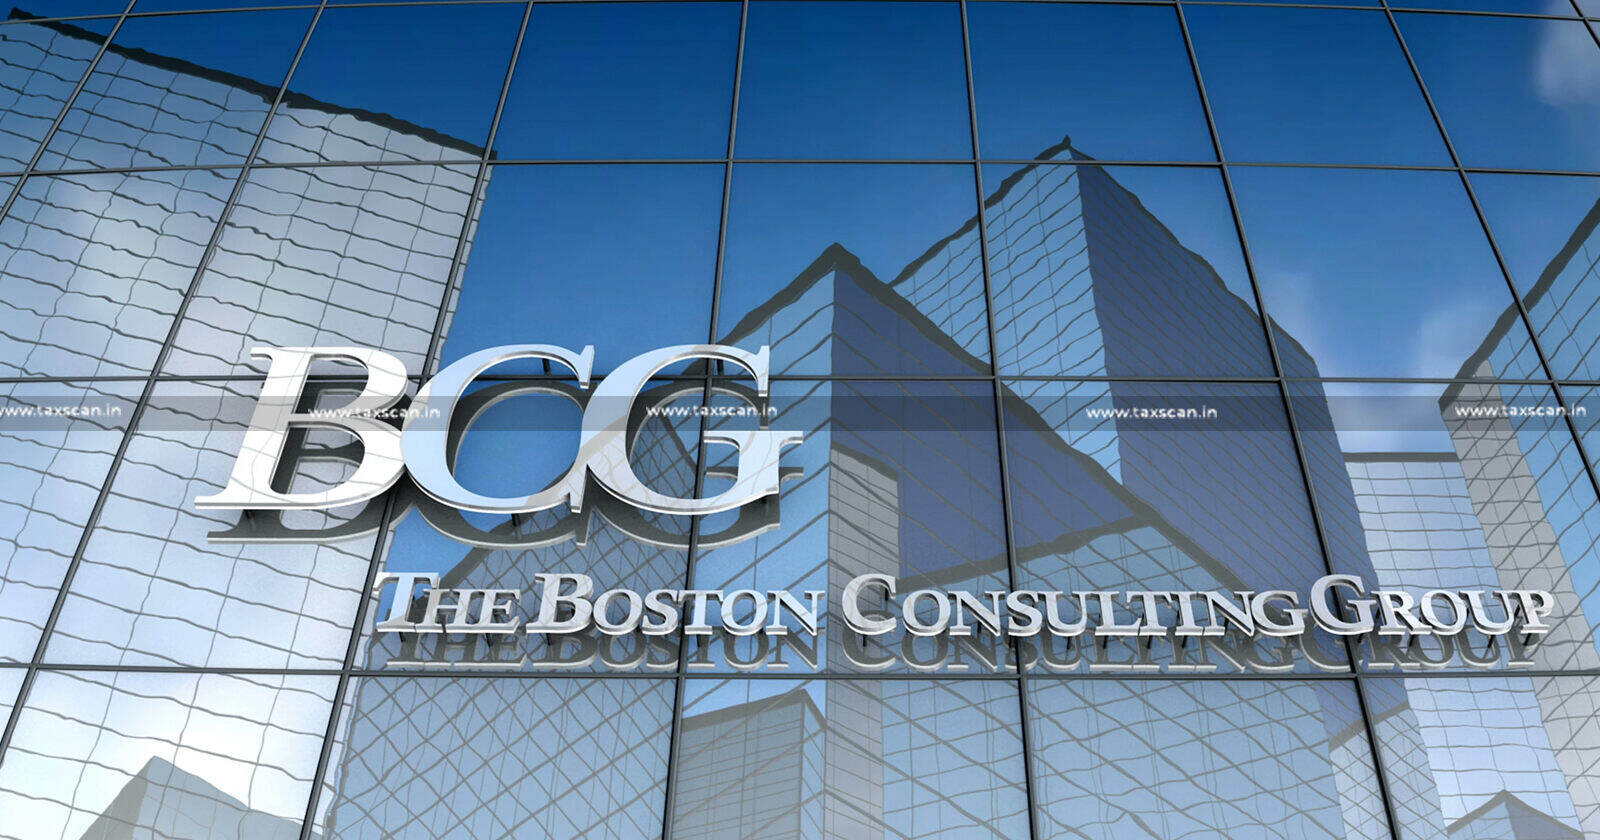 B. Com jobs at BCG - BCG Careers - BCG Hiring - BCG career opportunities - BCG job openings - Taxscan